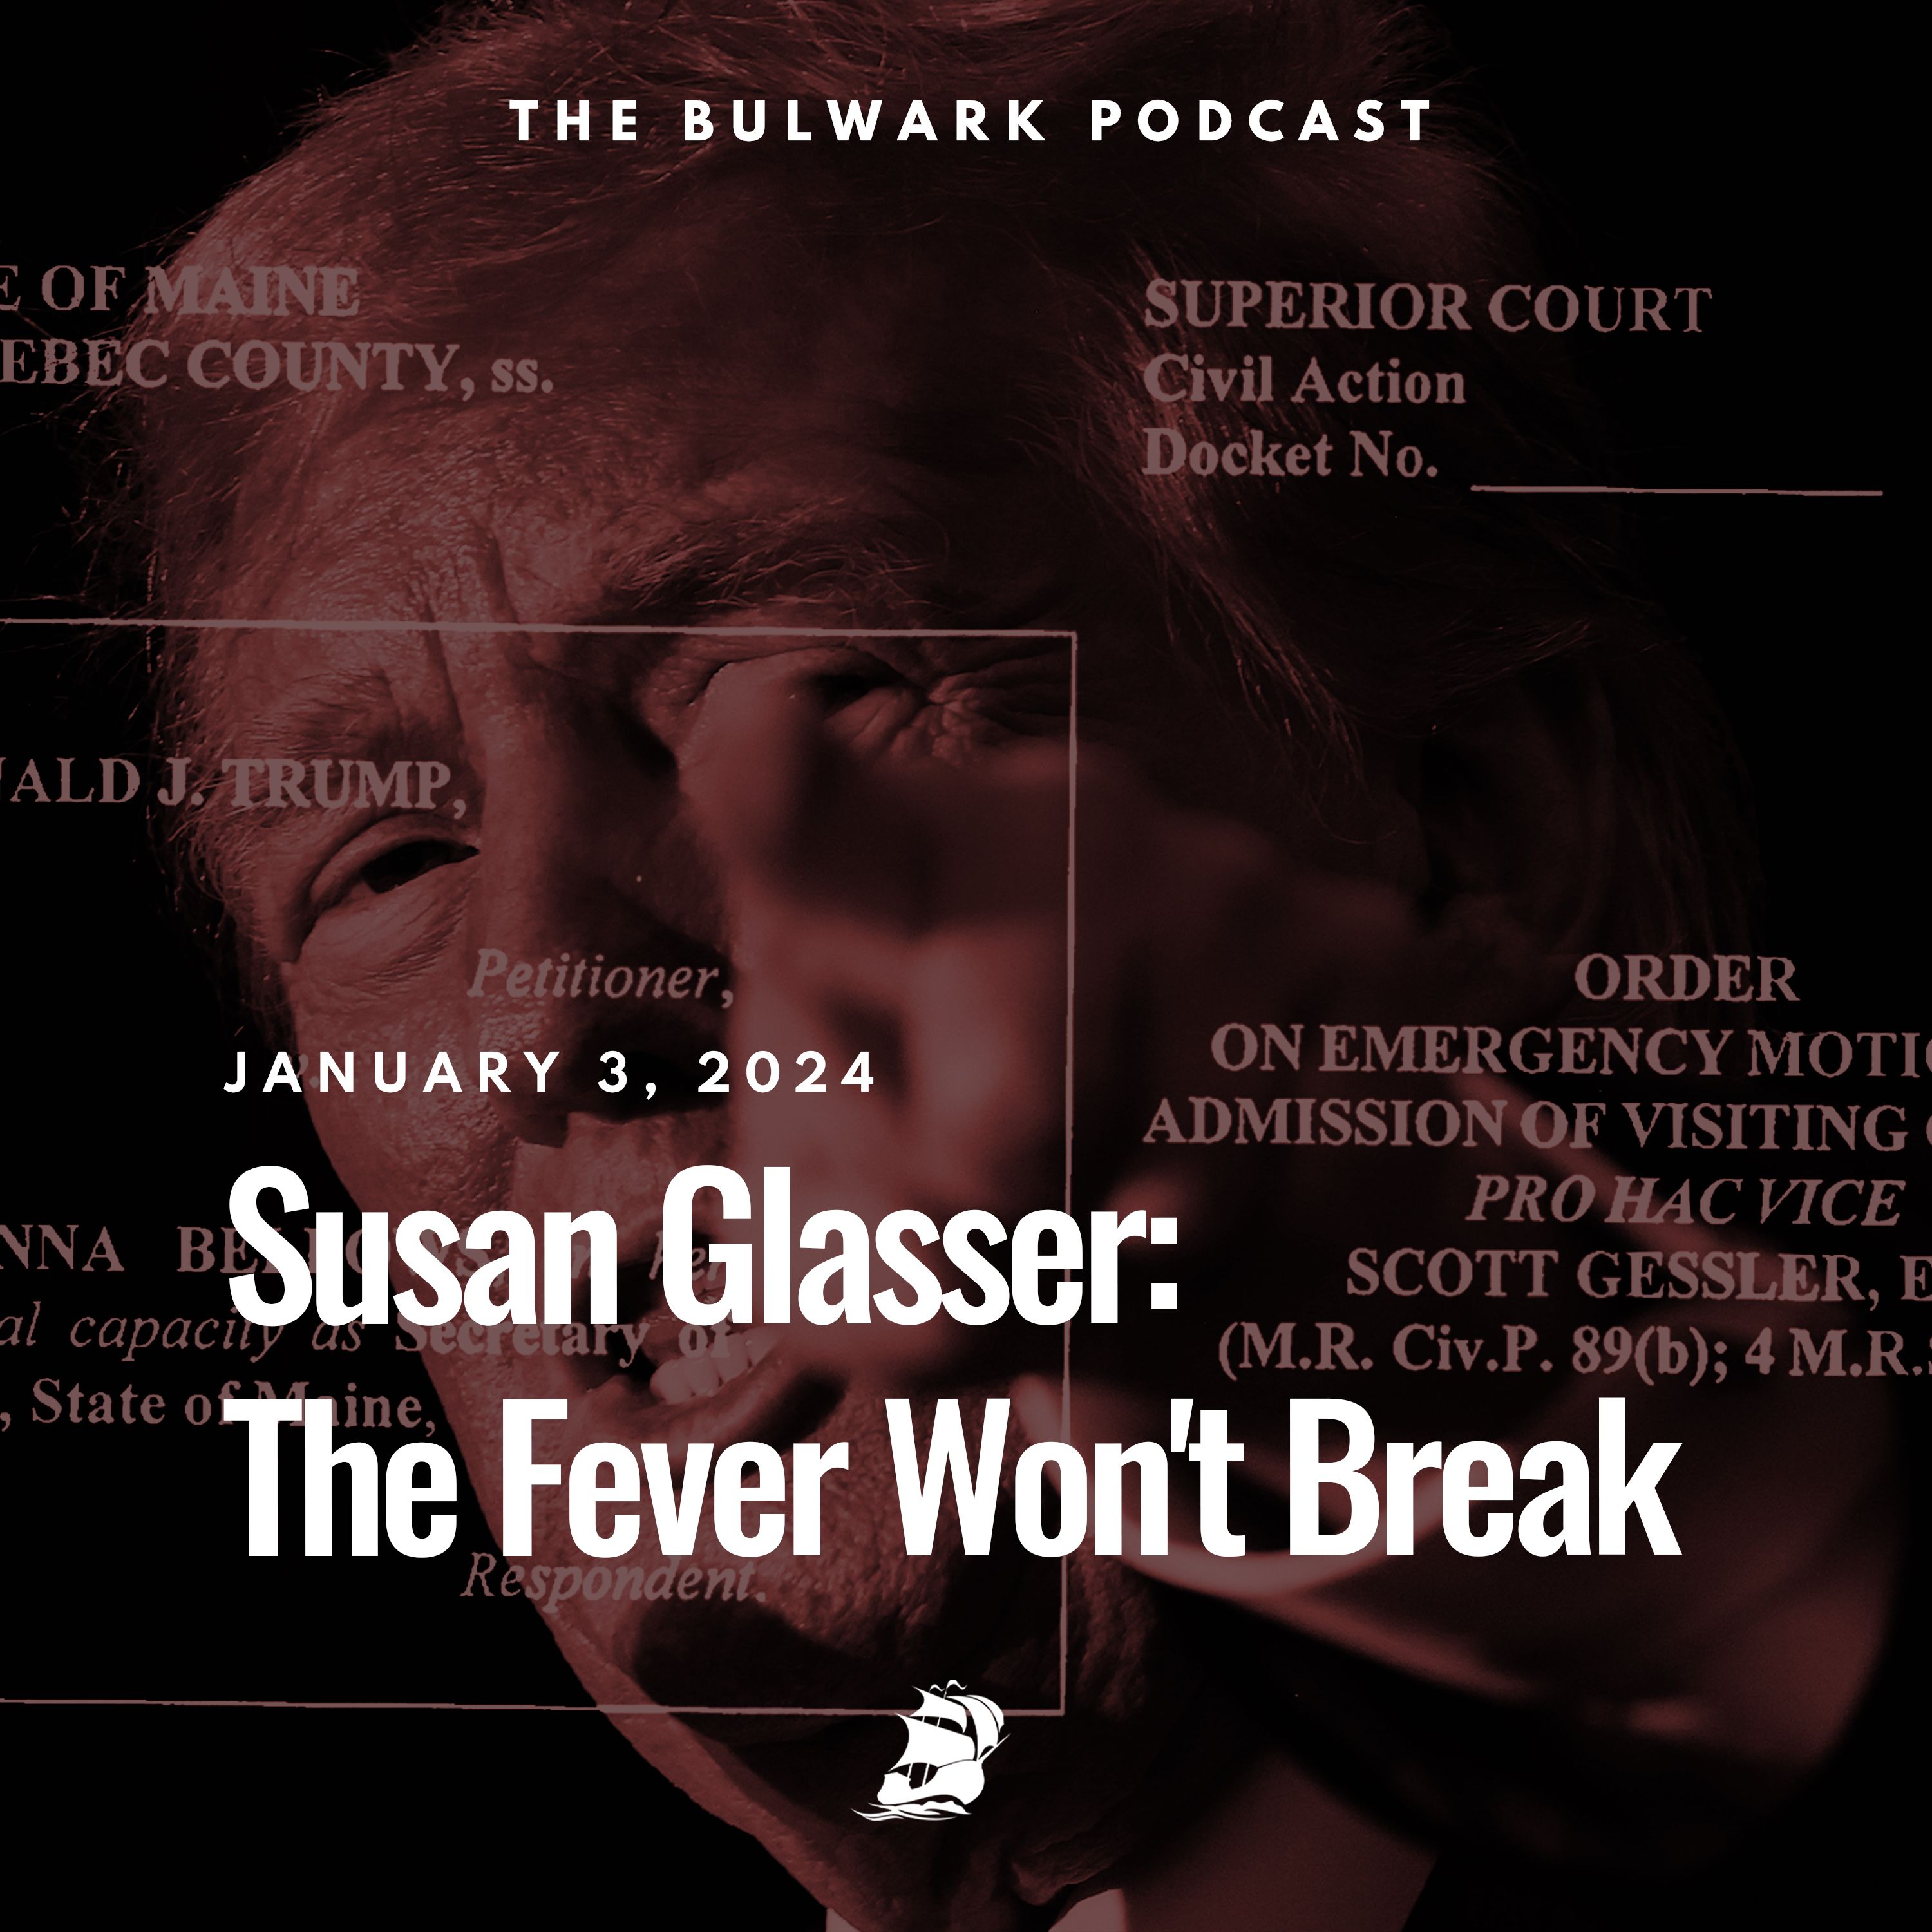 Susan Glasser: The Fever Won't Break by The Bulwark Podcast